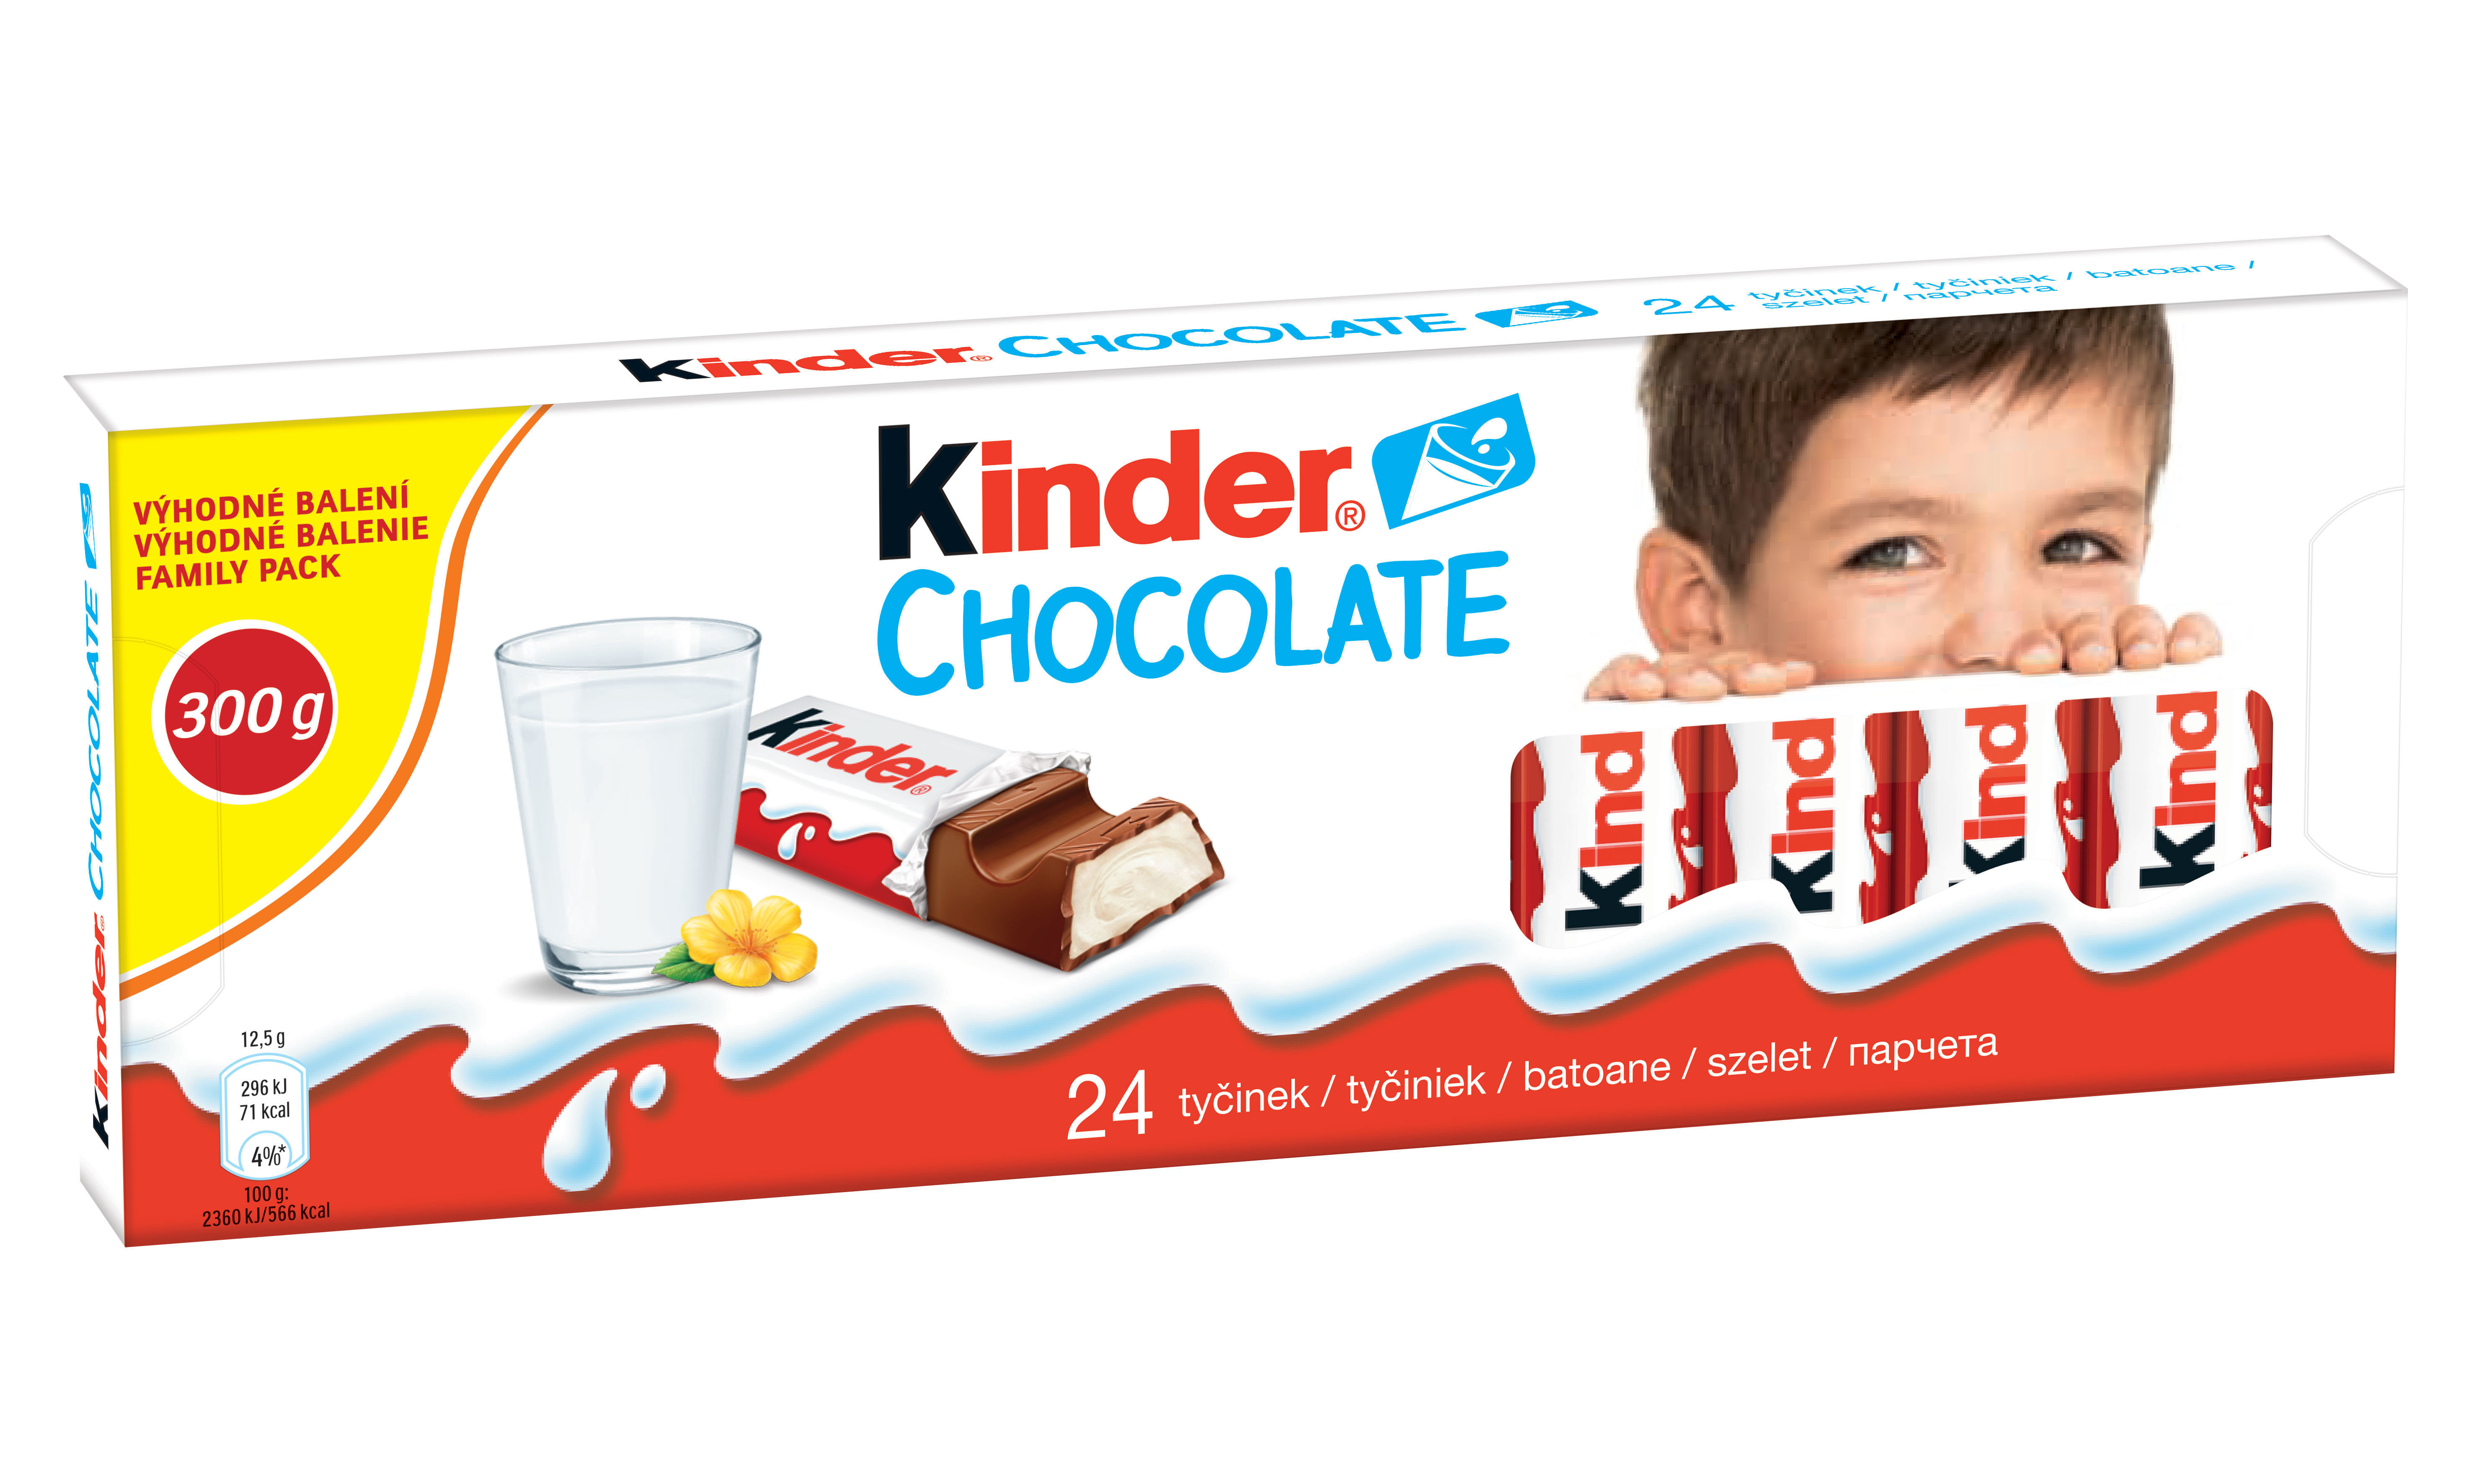 24 kinder. Киндер шоколад. Шоколадка Киндер. Kinder шоколад. Киндер 24 шт.